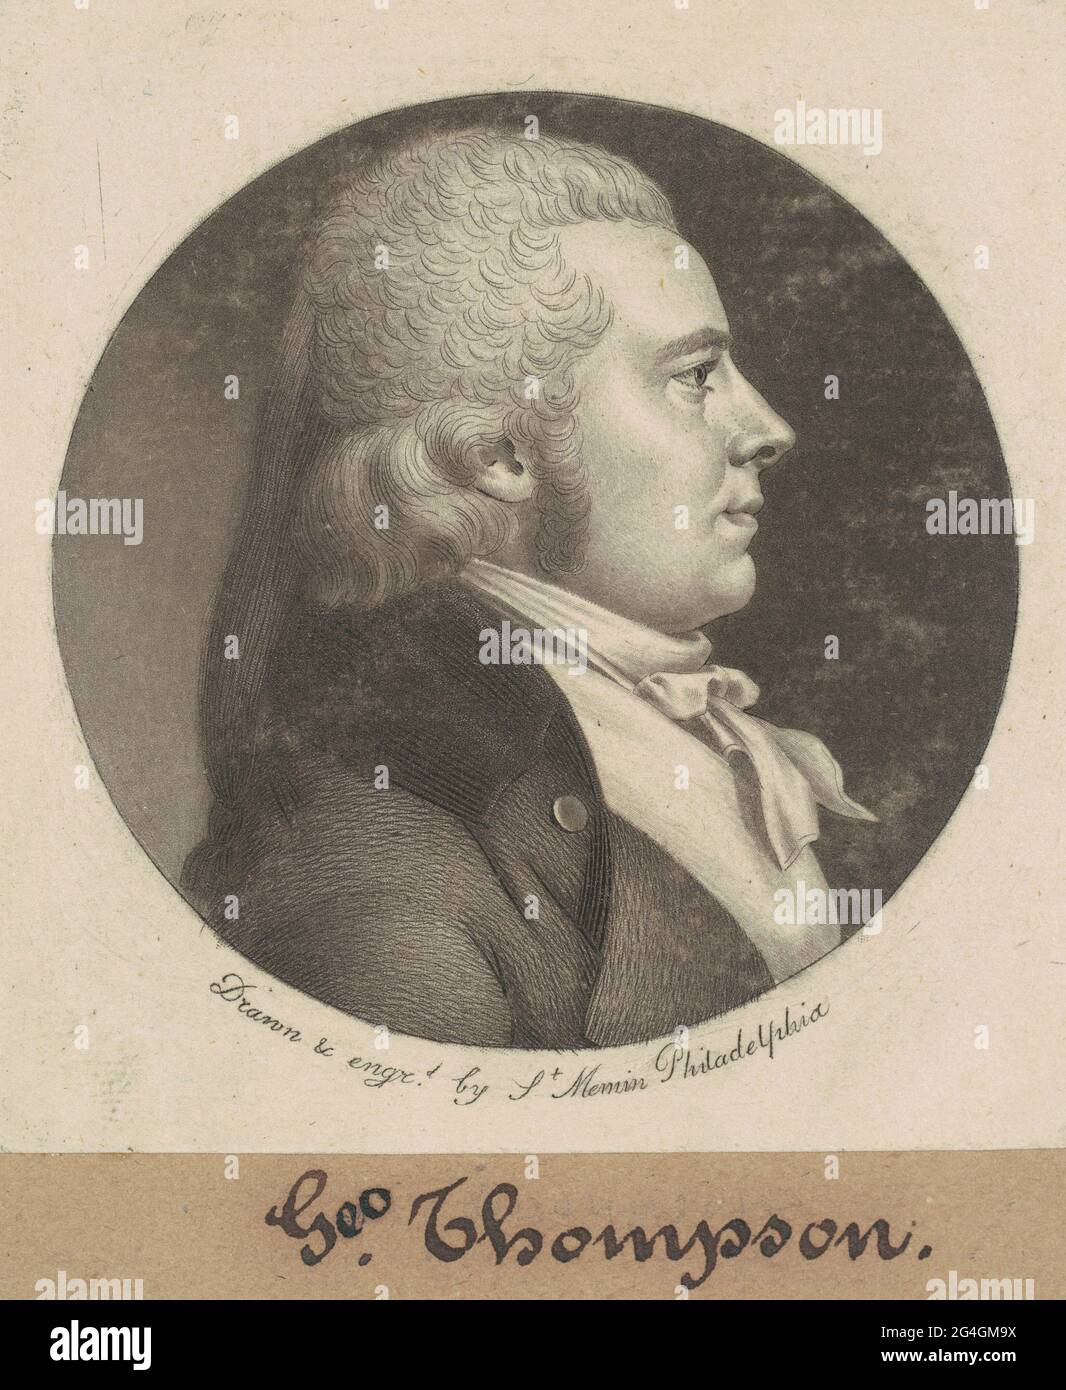 George Thompson, 1799. Stock Photo